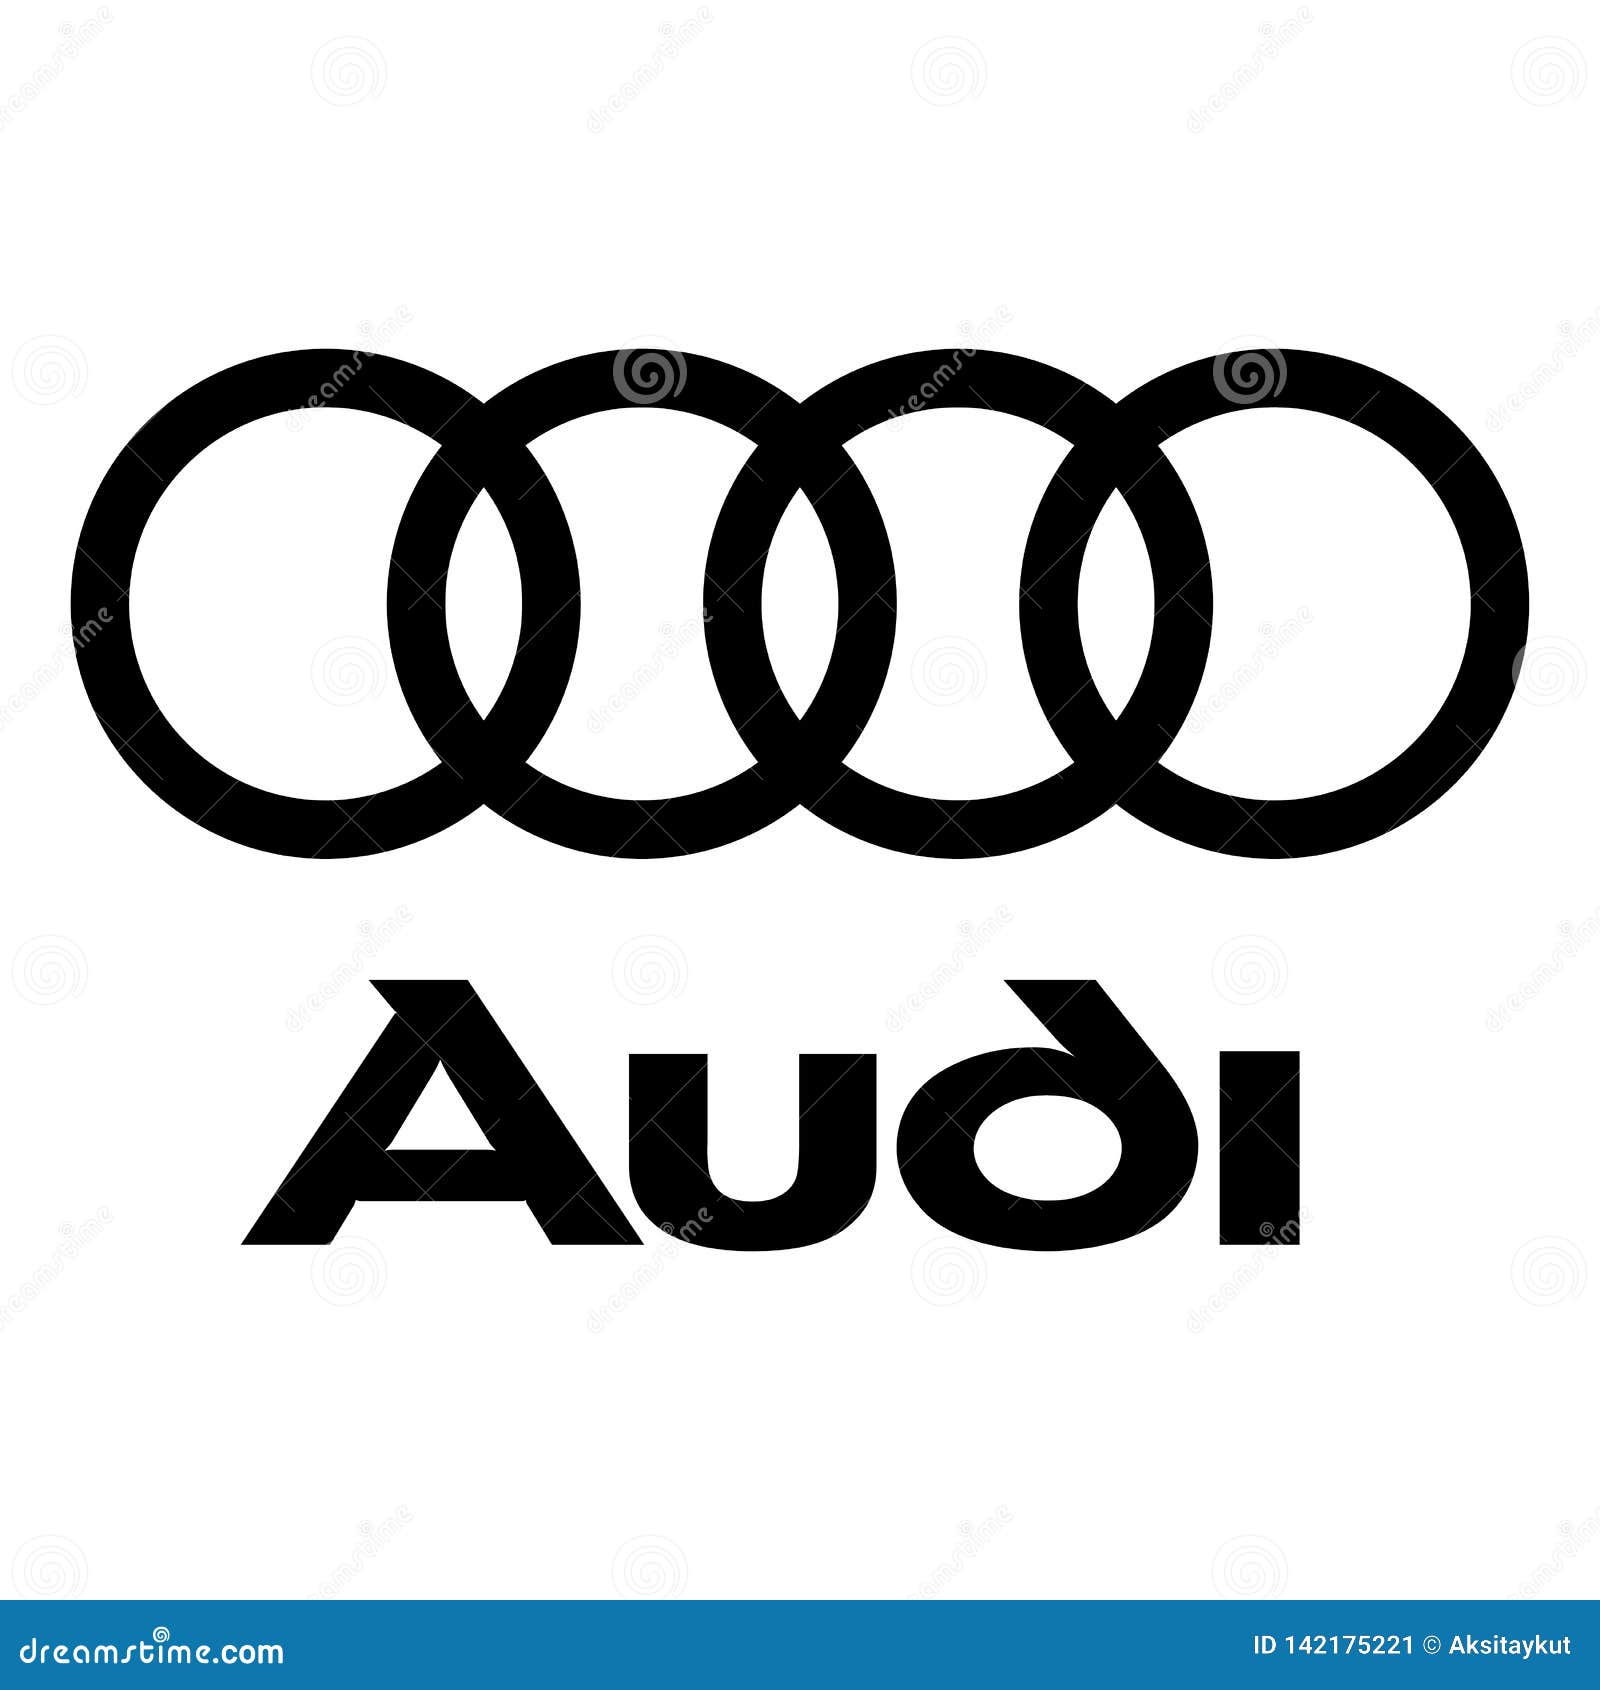 File:Audi logo on Audi R8.jpg - Wikimedia Commons